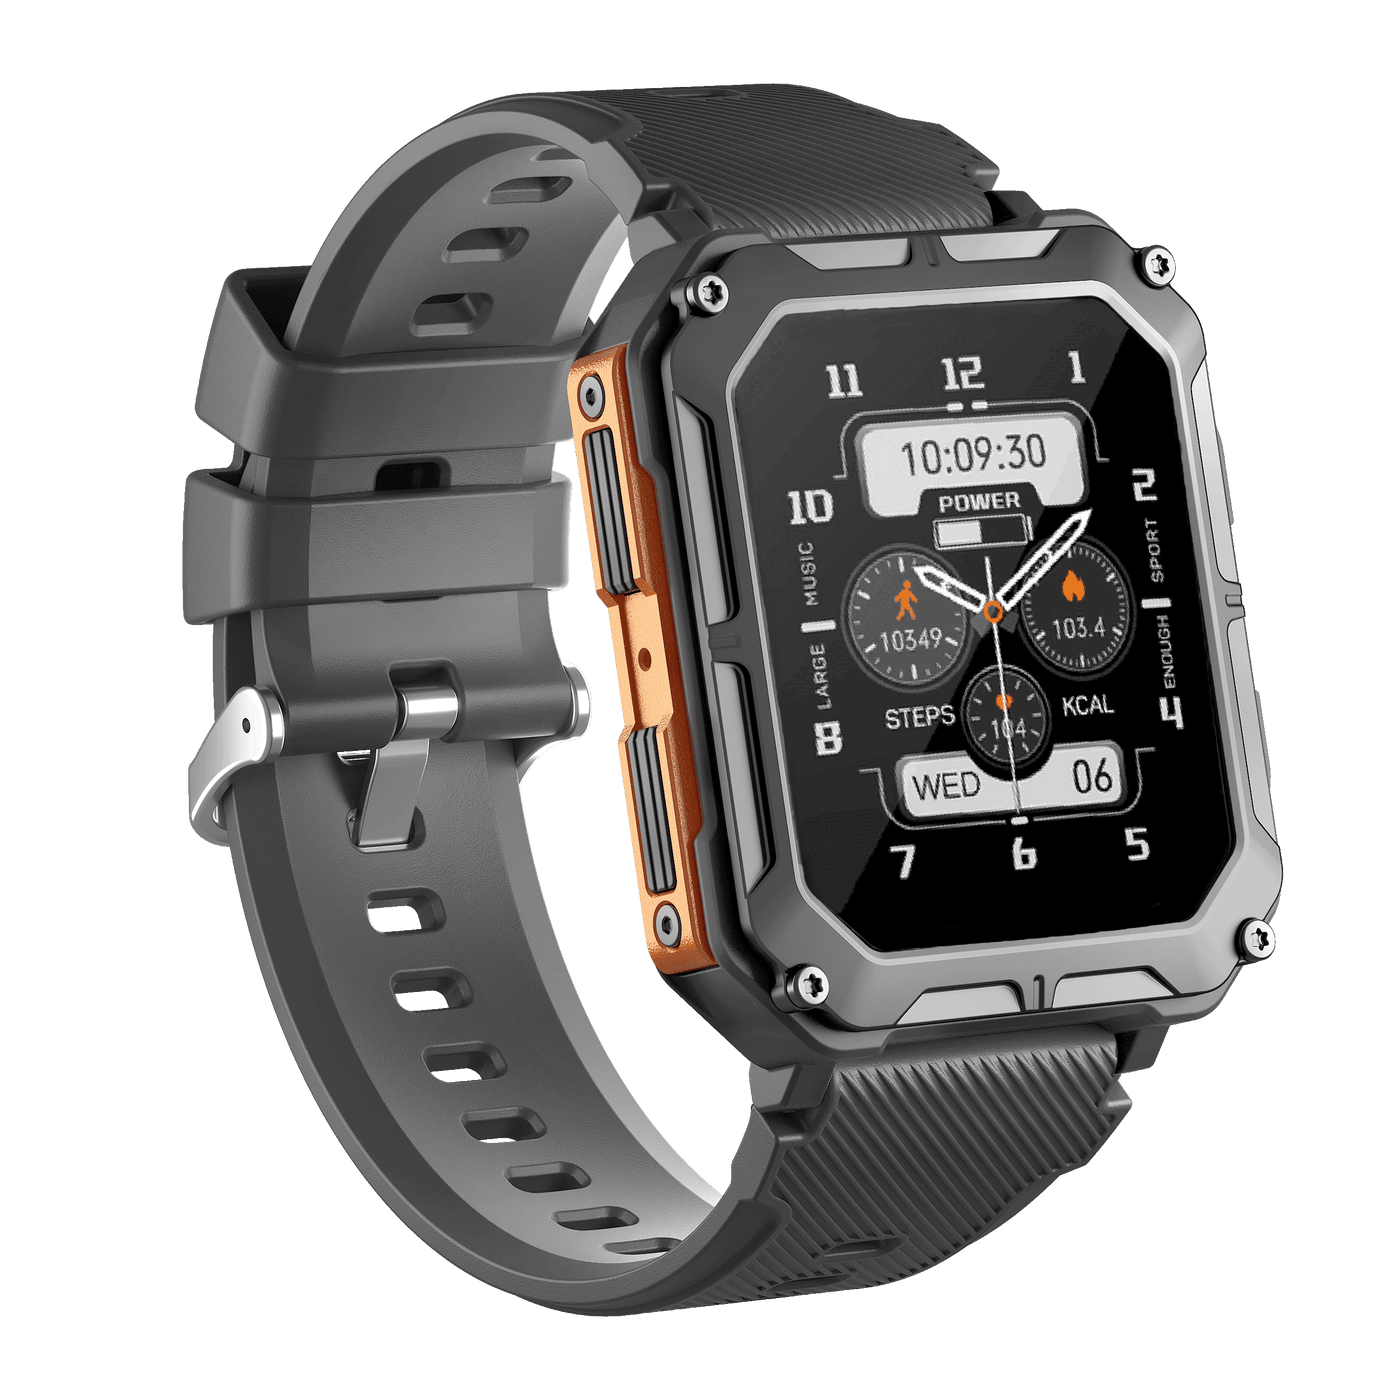 The Indestructible Smartwatch